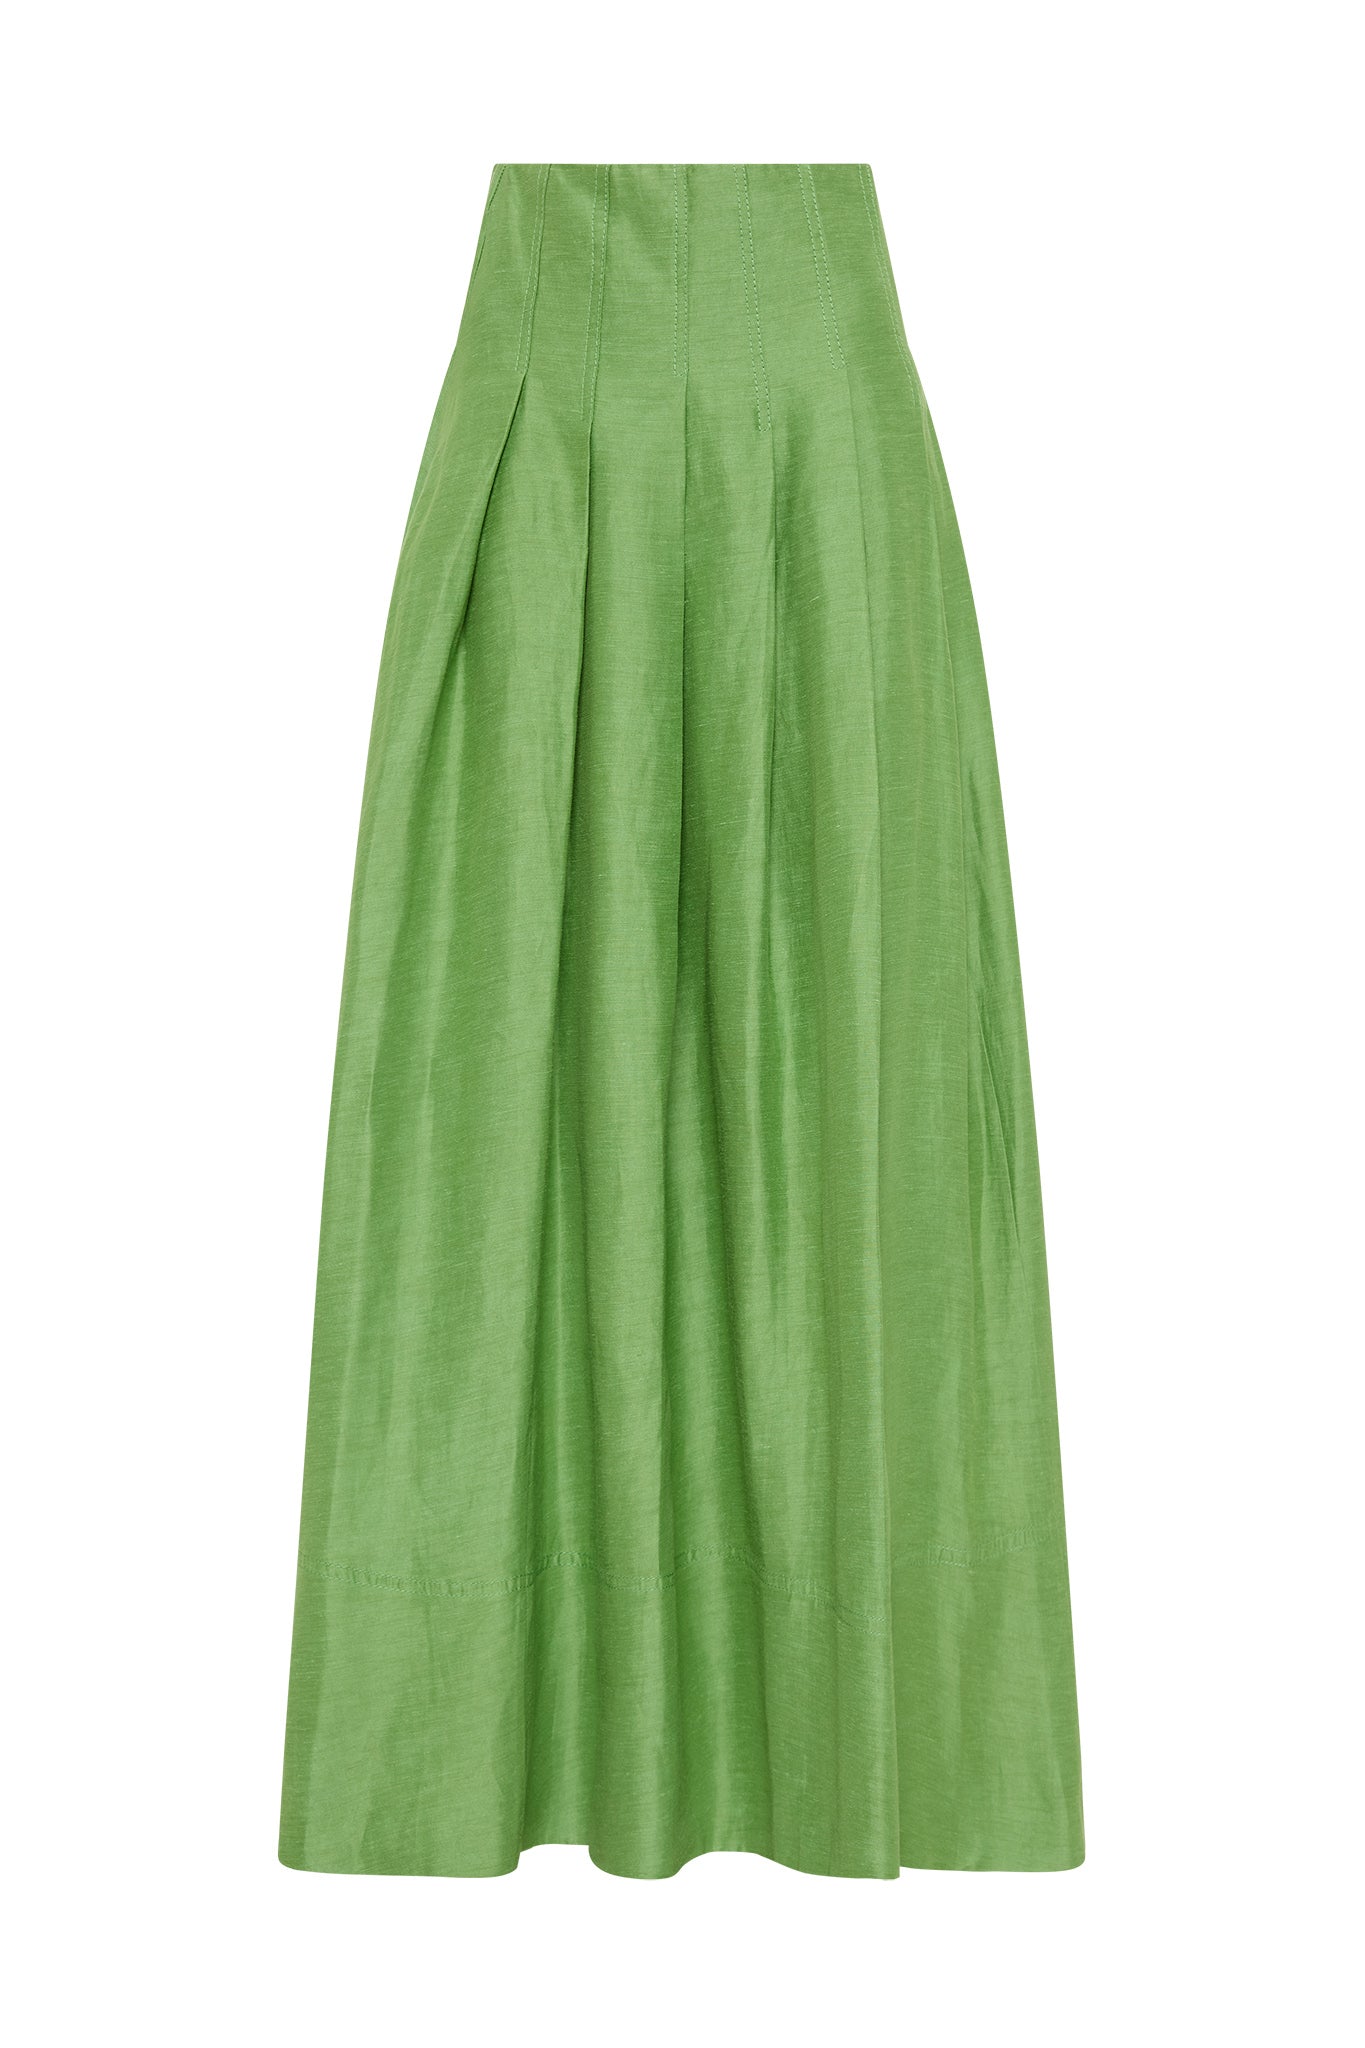 Paradiso Cinched Midi Skirt, Fern Green